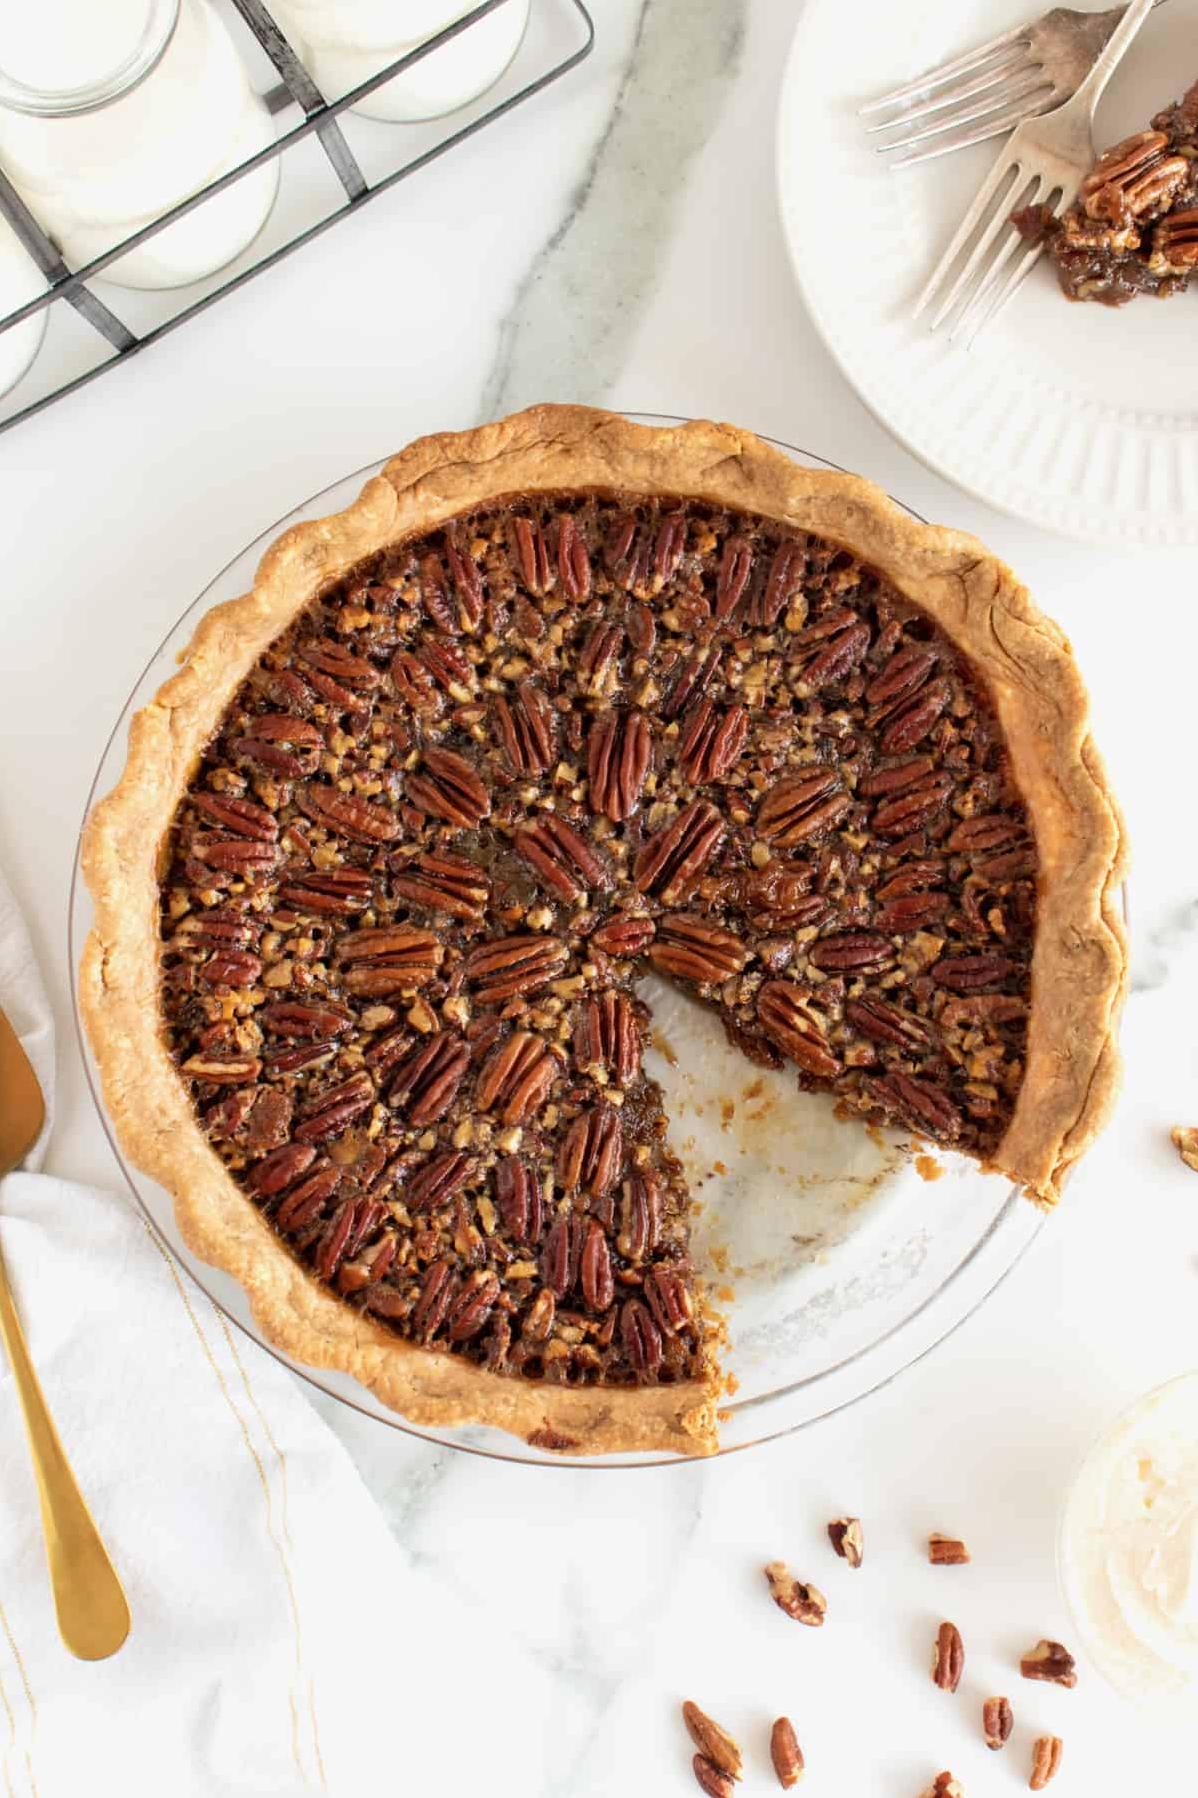  Homemade and Heartwarming: Southern Grandma's Pecan Pie